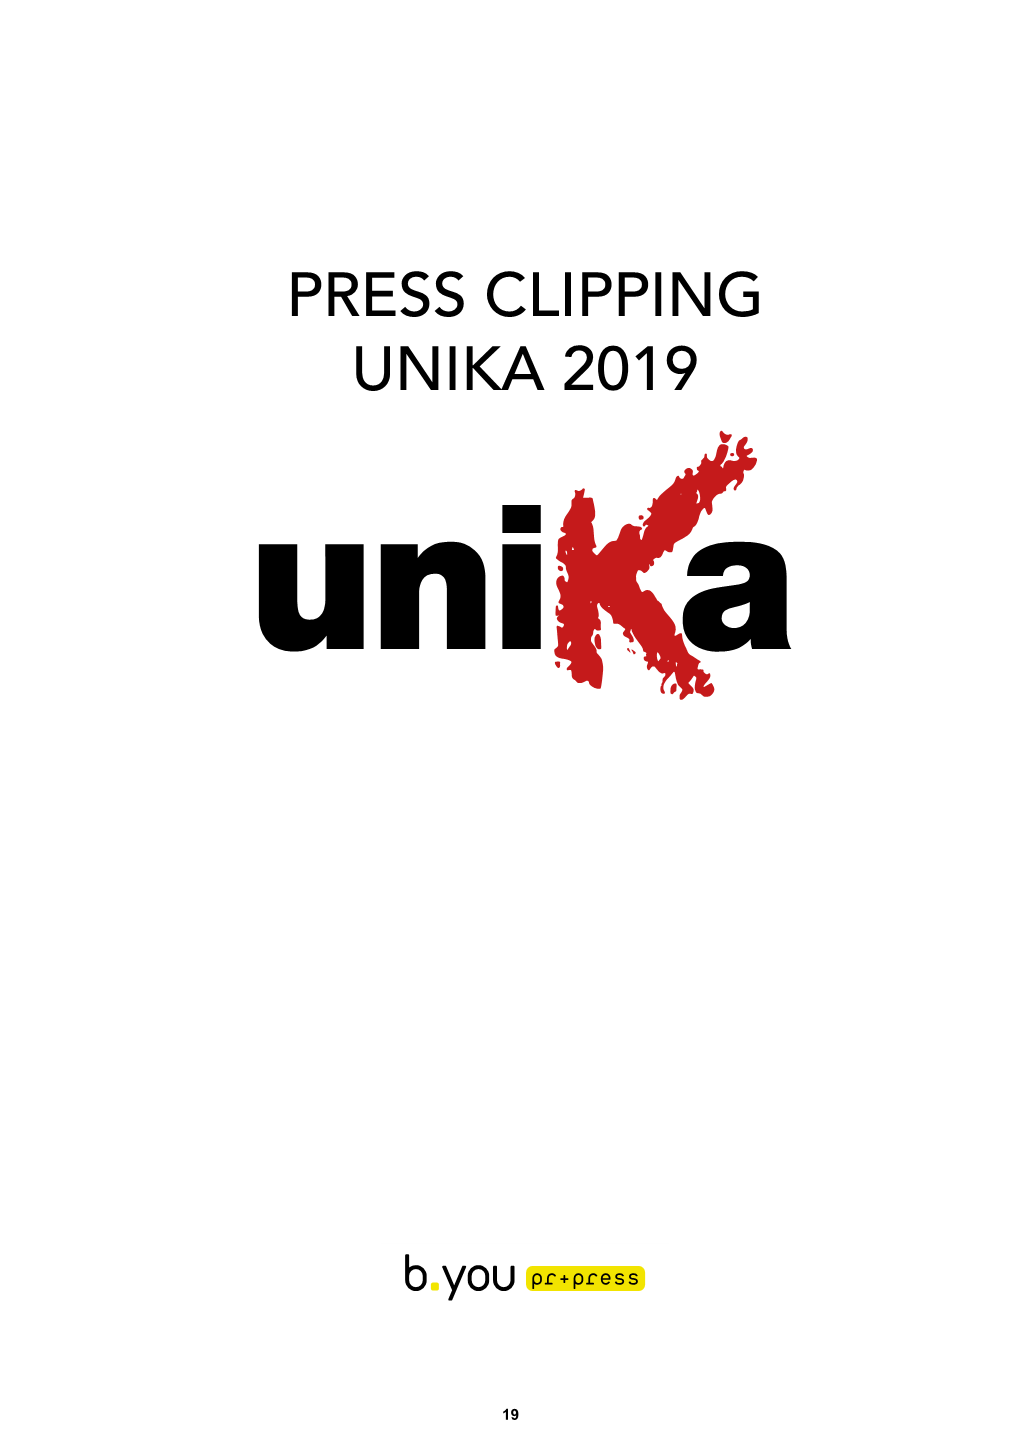 Press Clipping Unika 2019 Presse Clipping Unika 2019